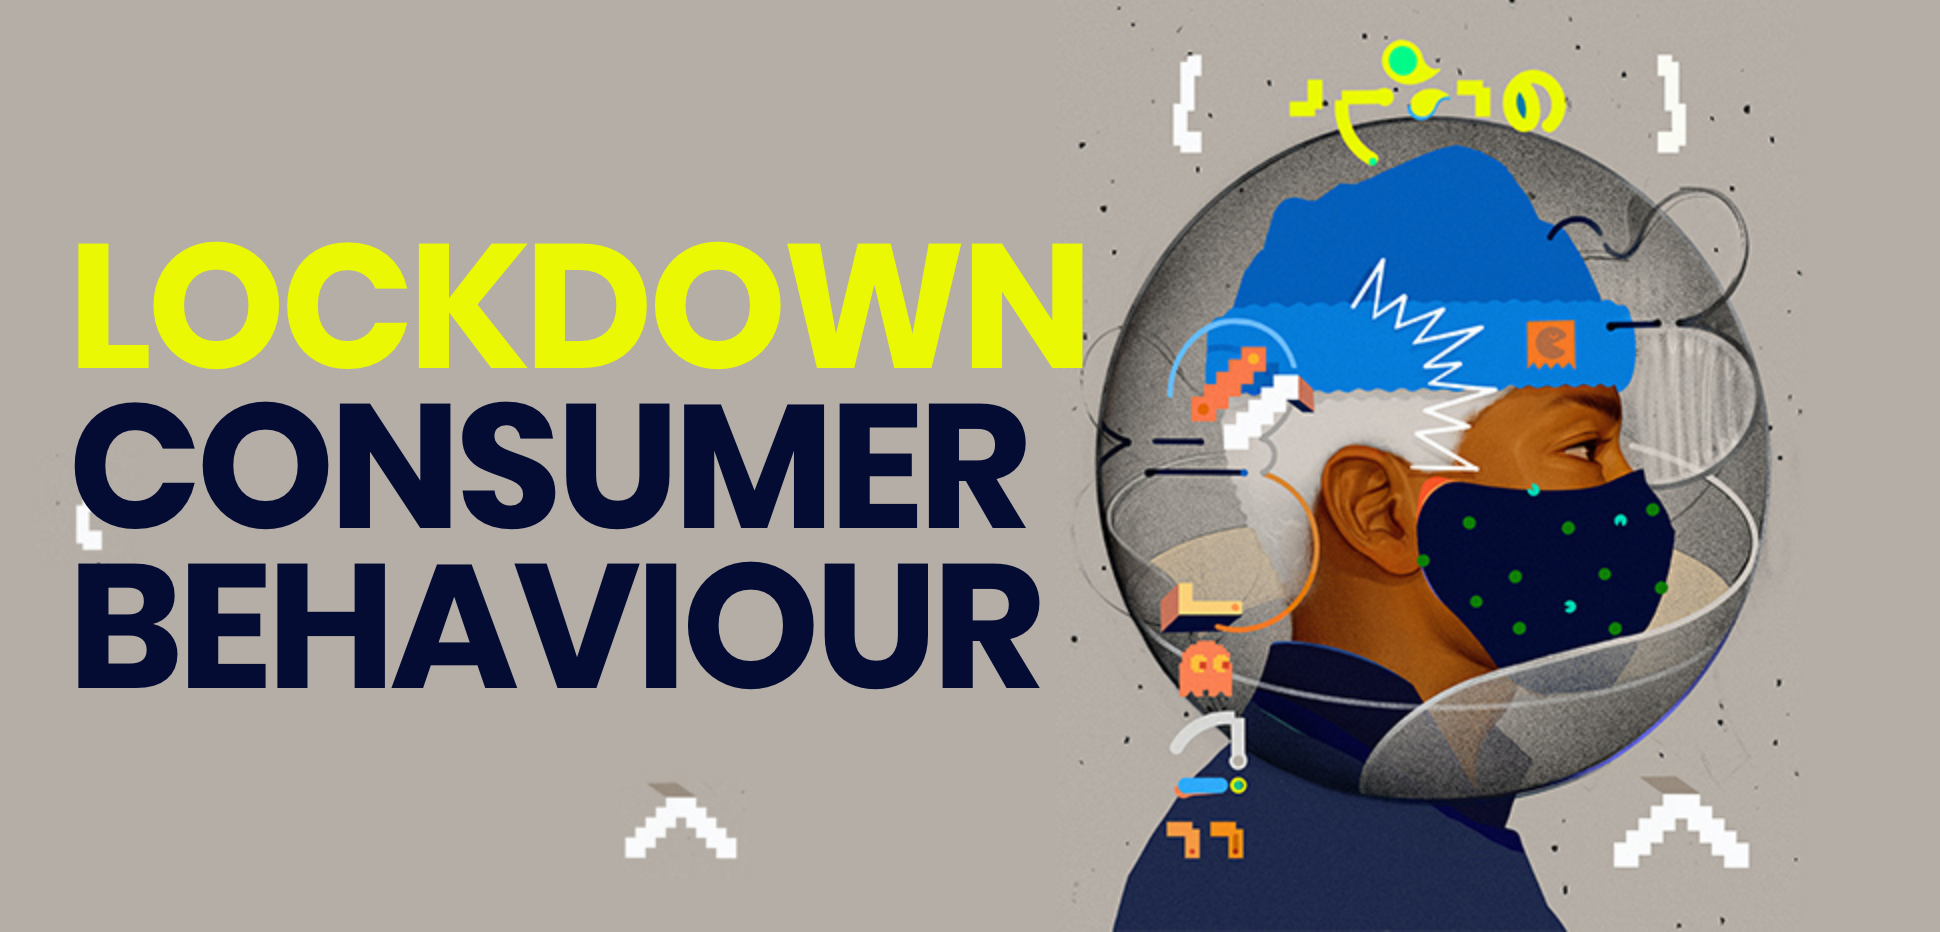 Lockdown consumer behaviour